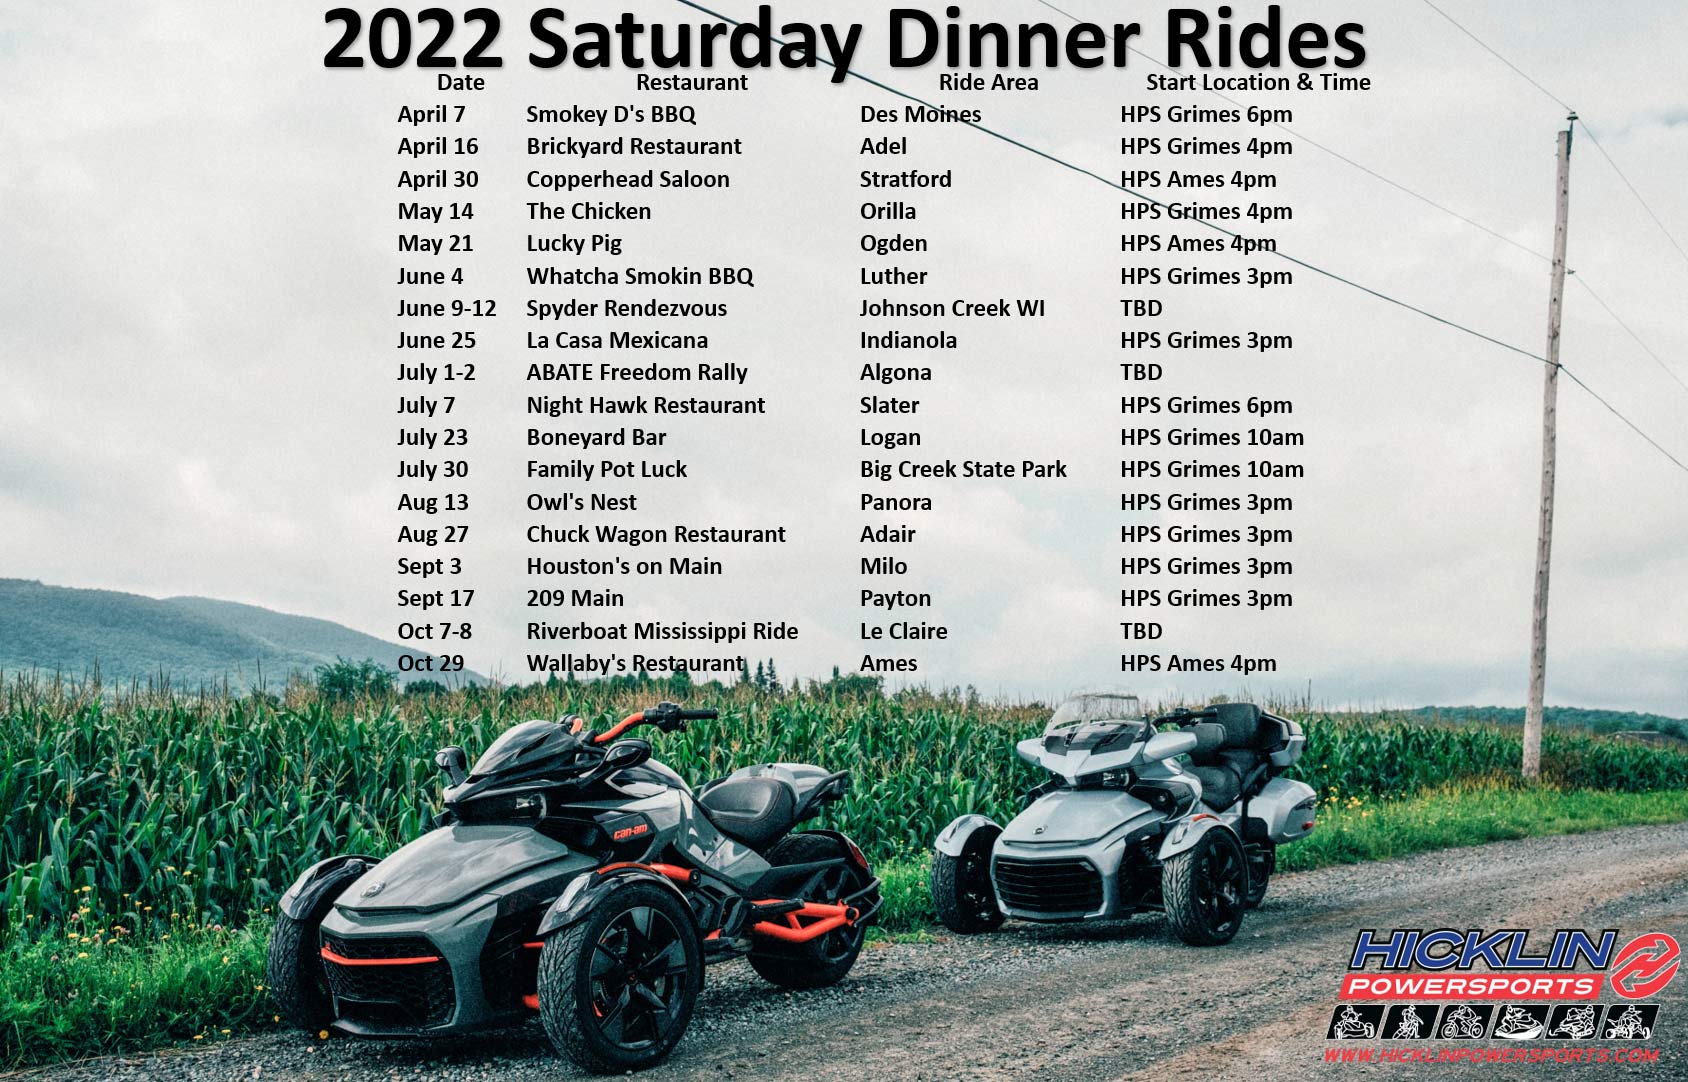 2022 Saturday Dinner Rides Calendar